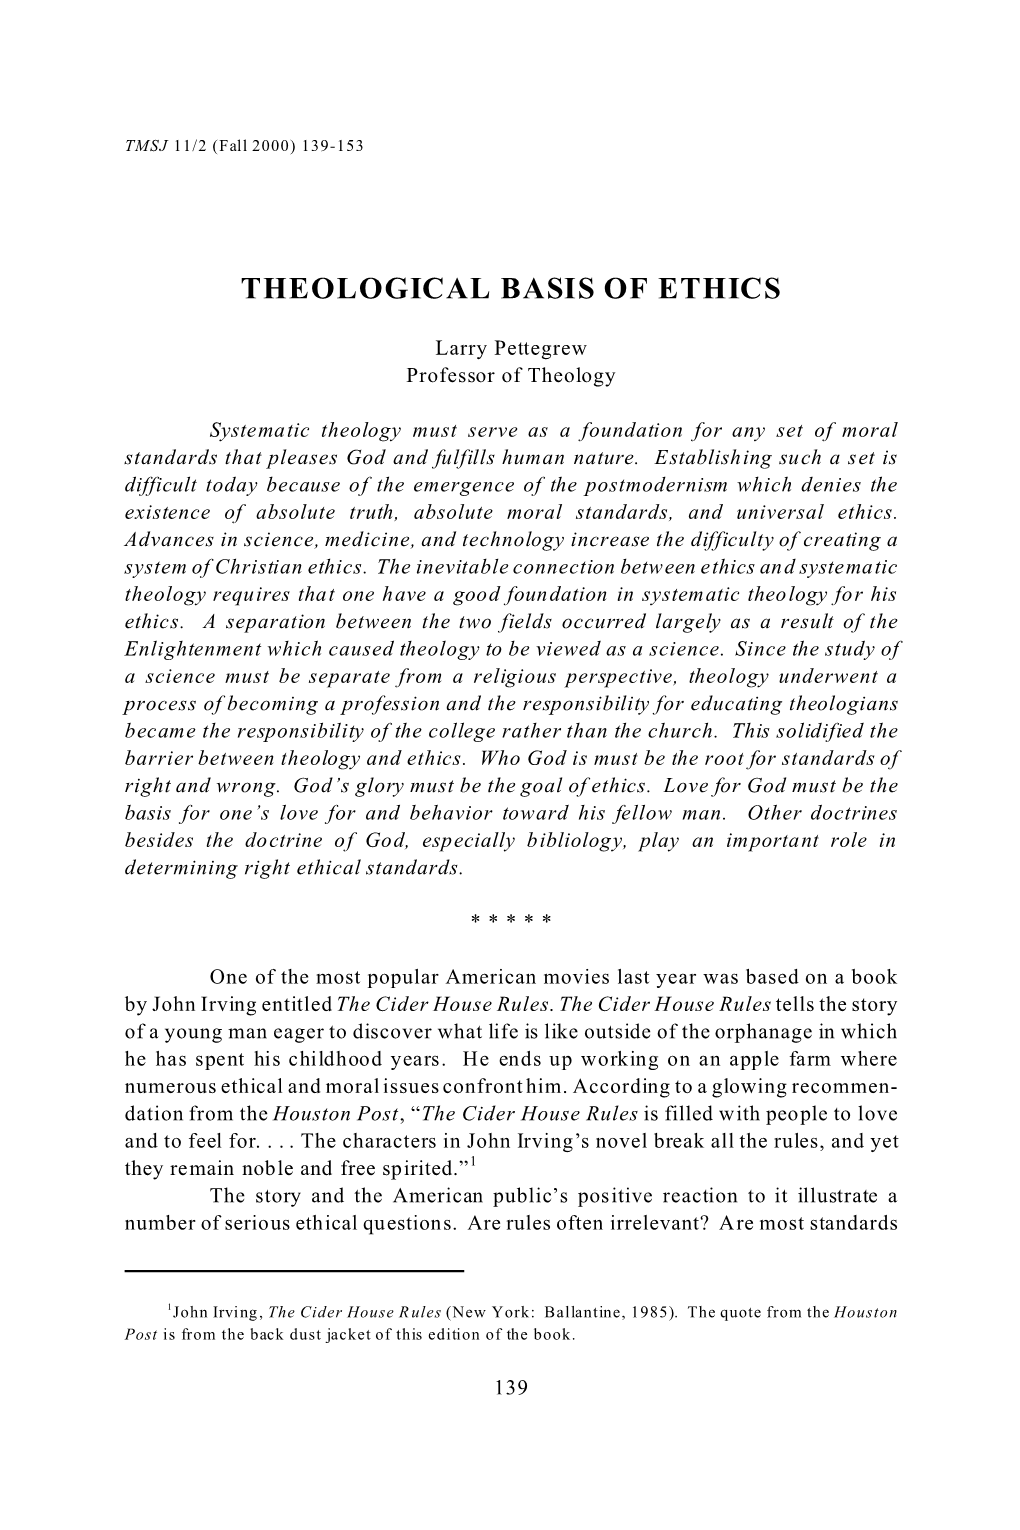 Theological Basis of Ethics